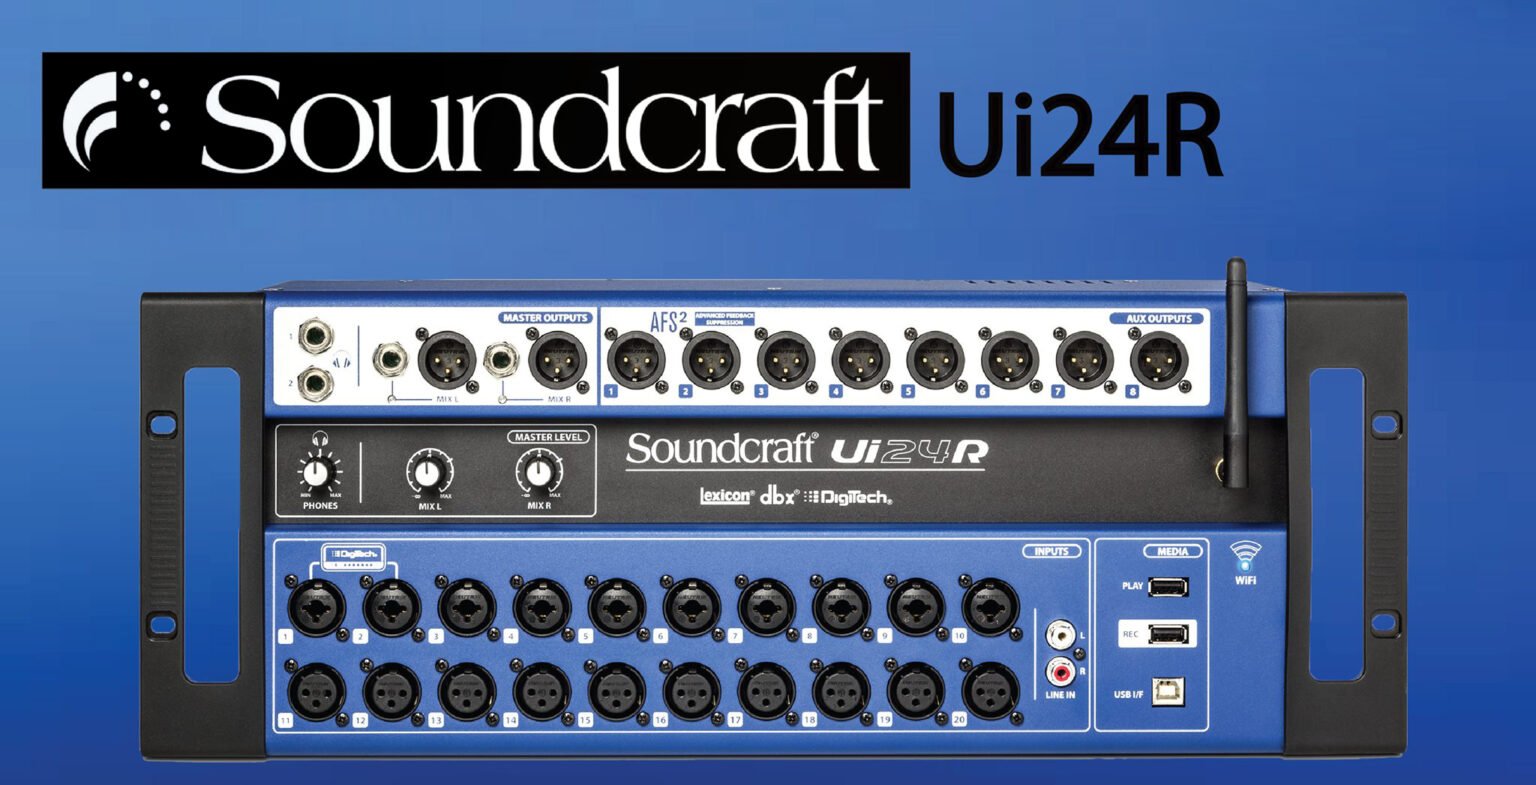 Soundcraft UI24R digital mixer